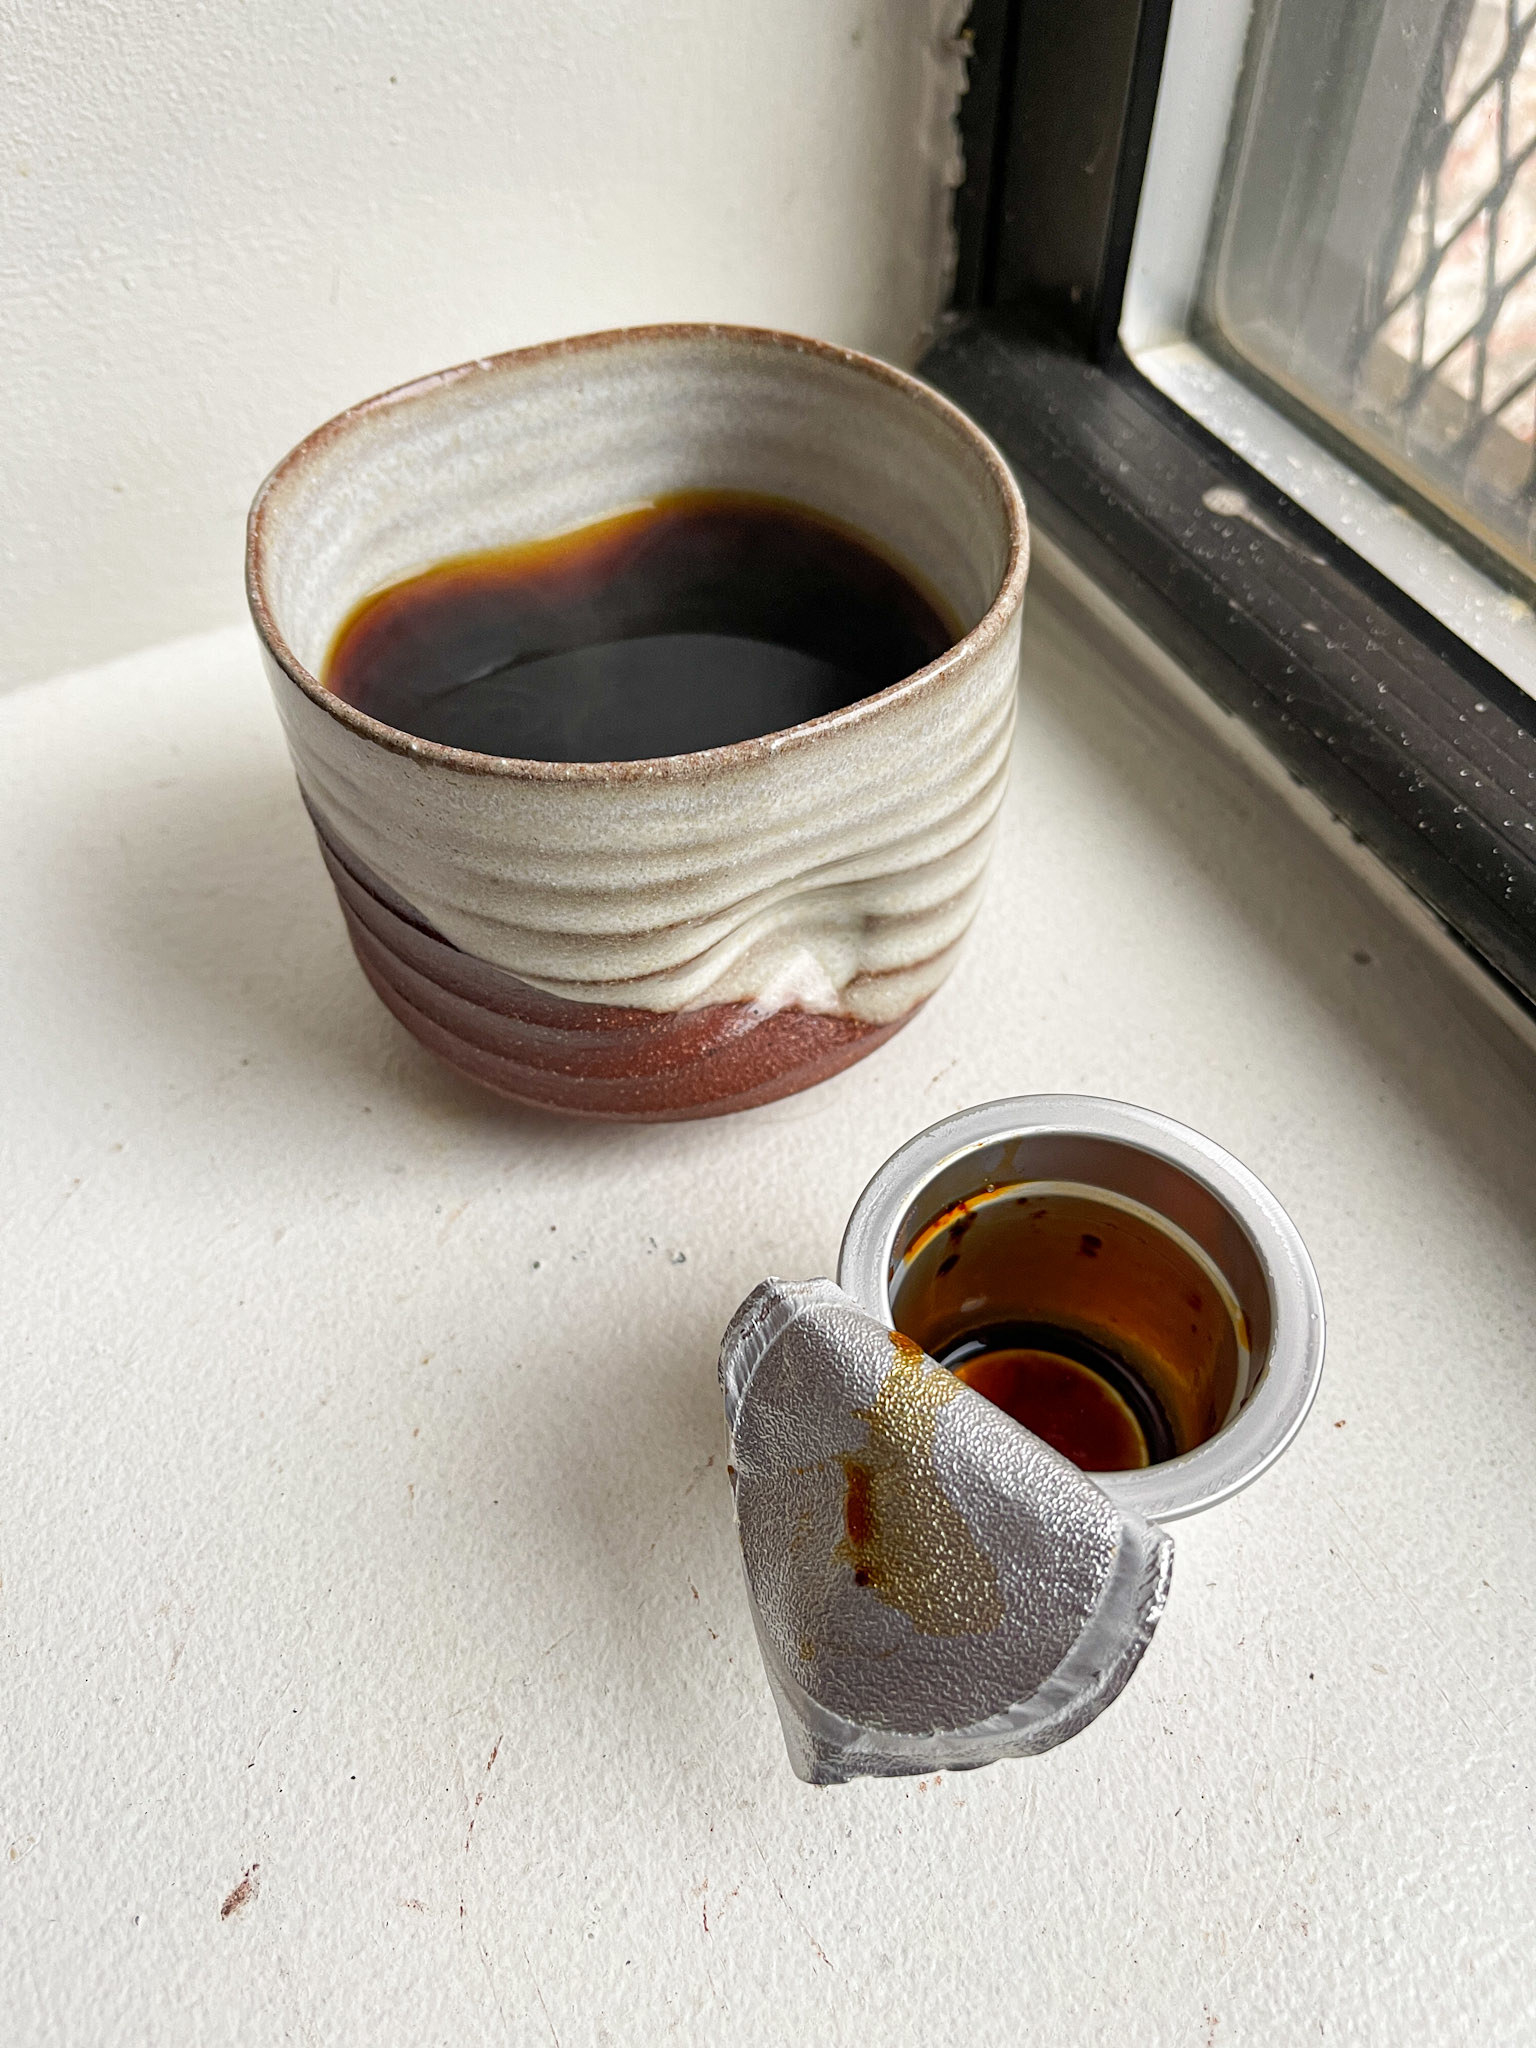 empty coffee capsule next to hot coffee mug